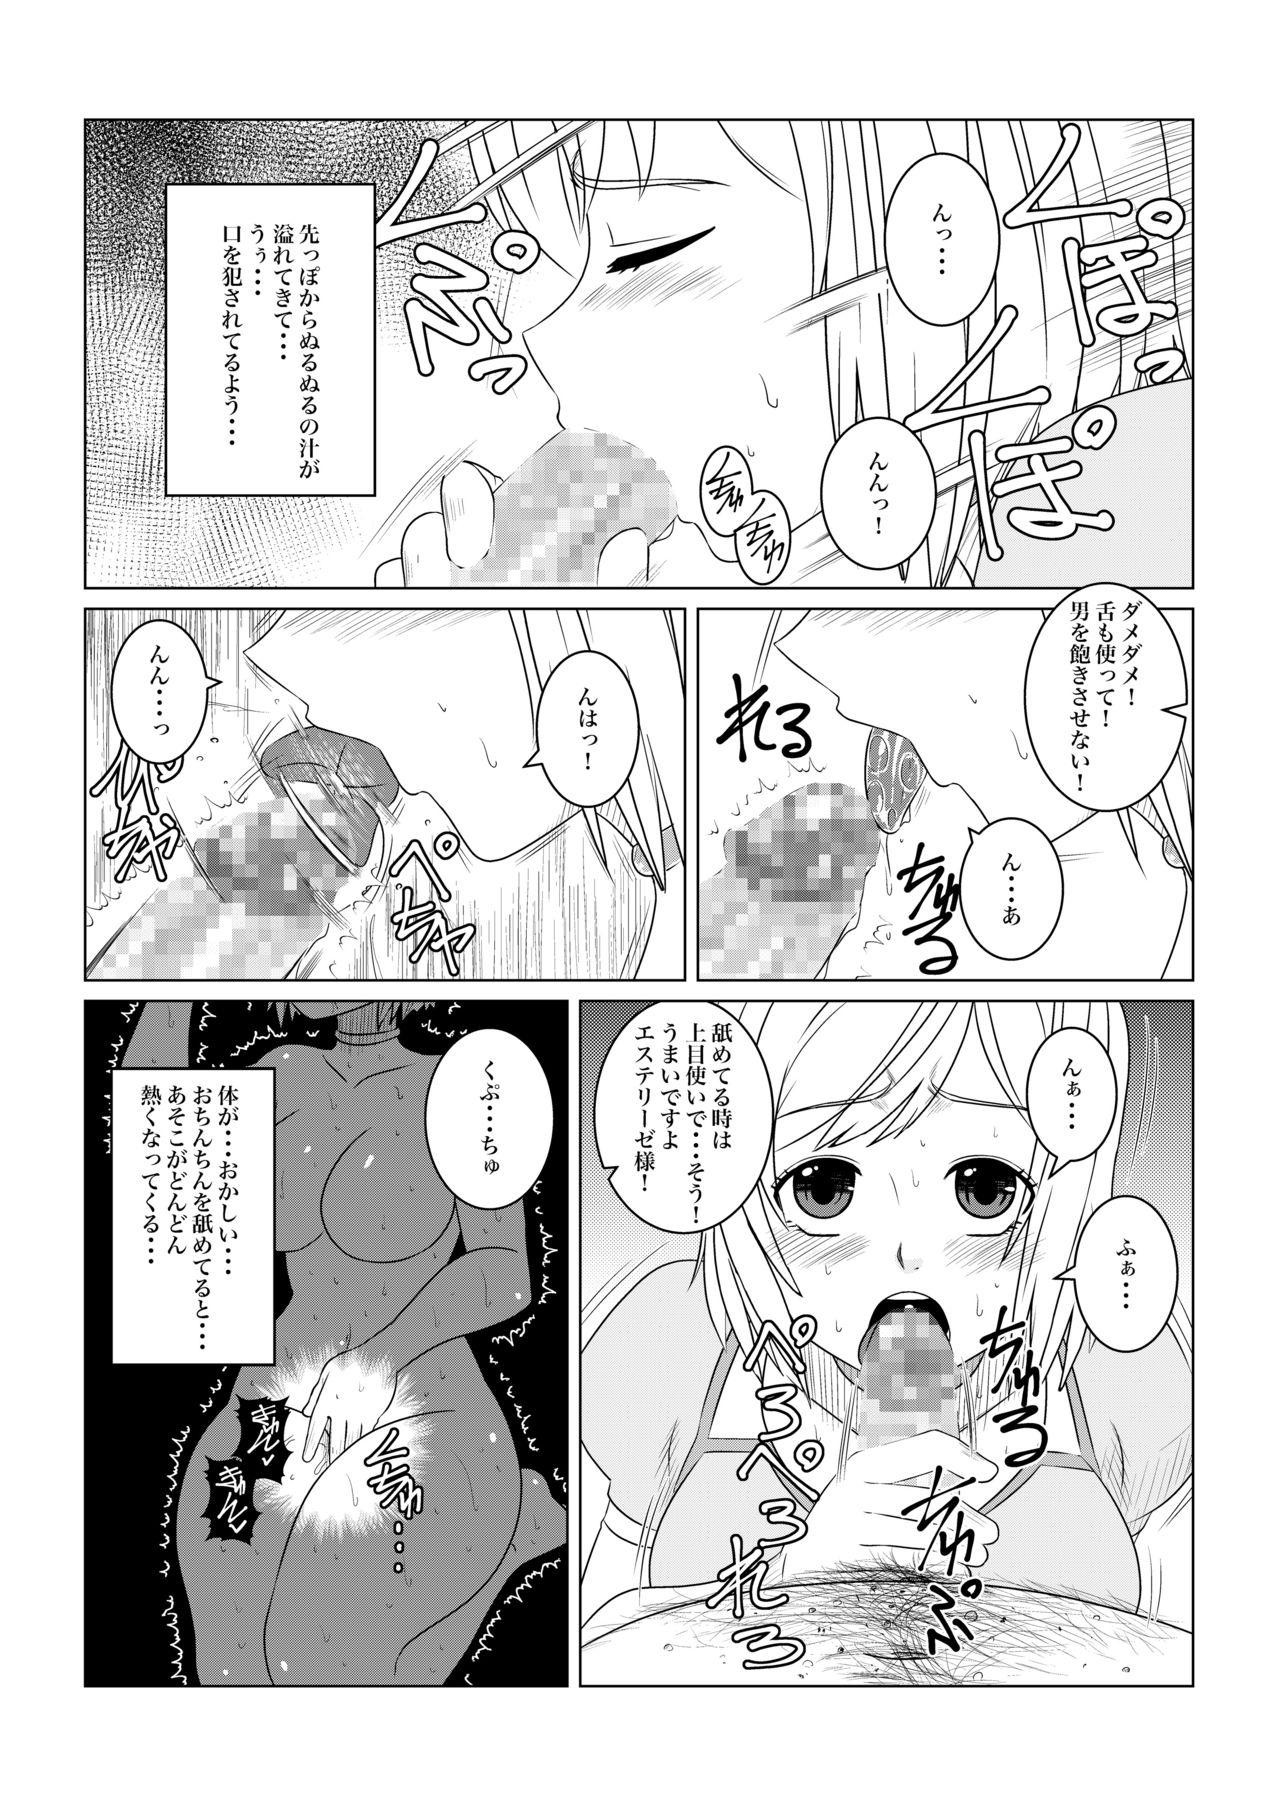 Beautiful Gekka Midarezaki - Tales of vesperia Blows - Page 11